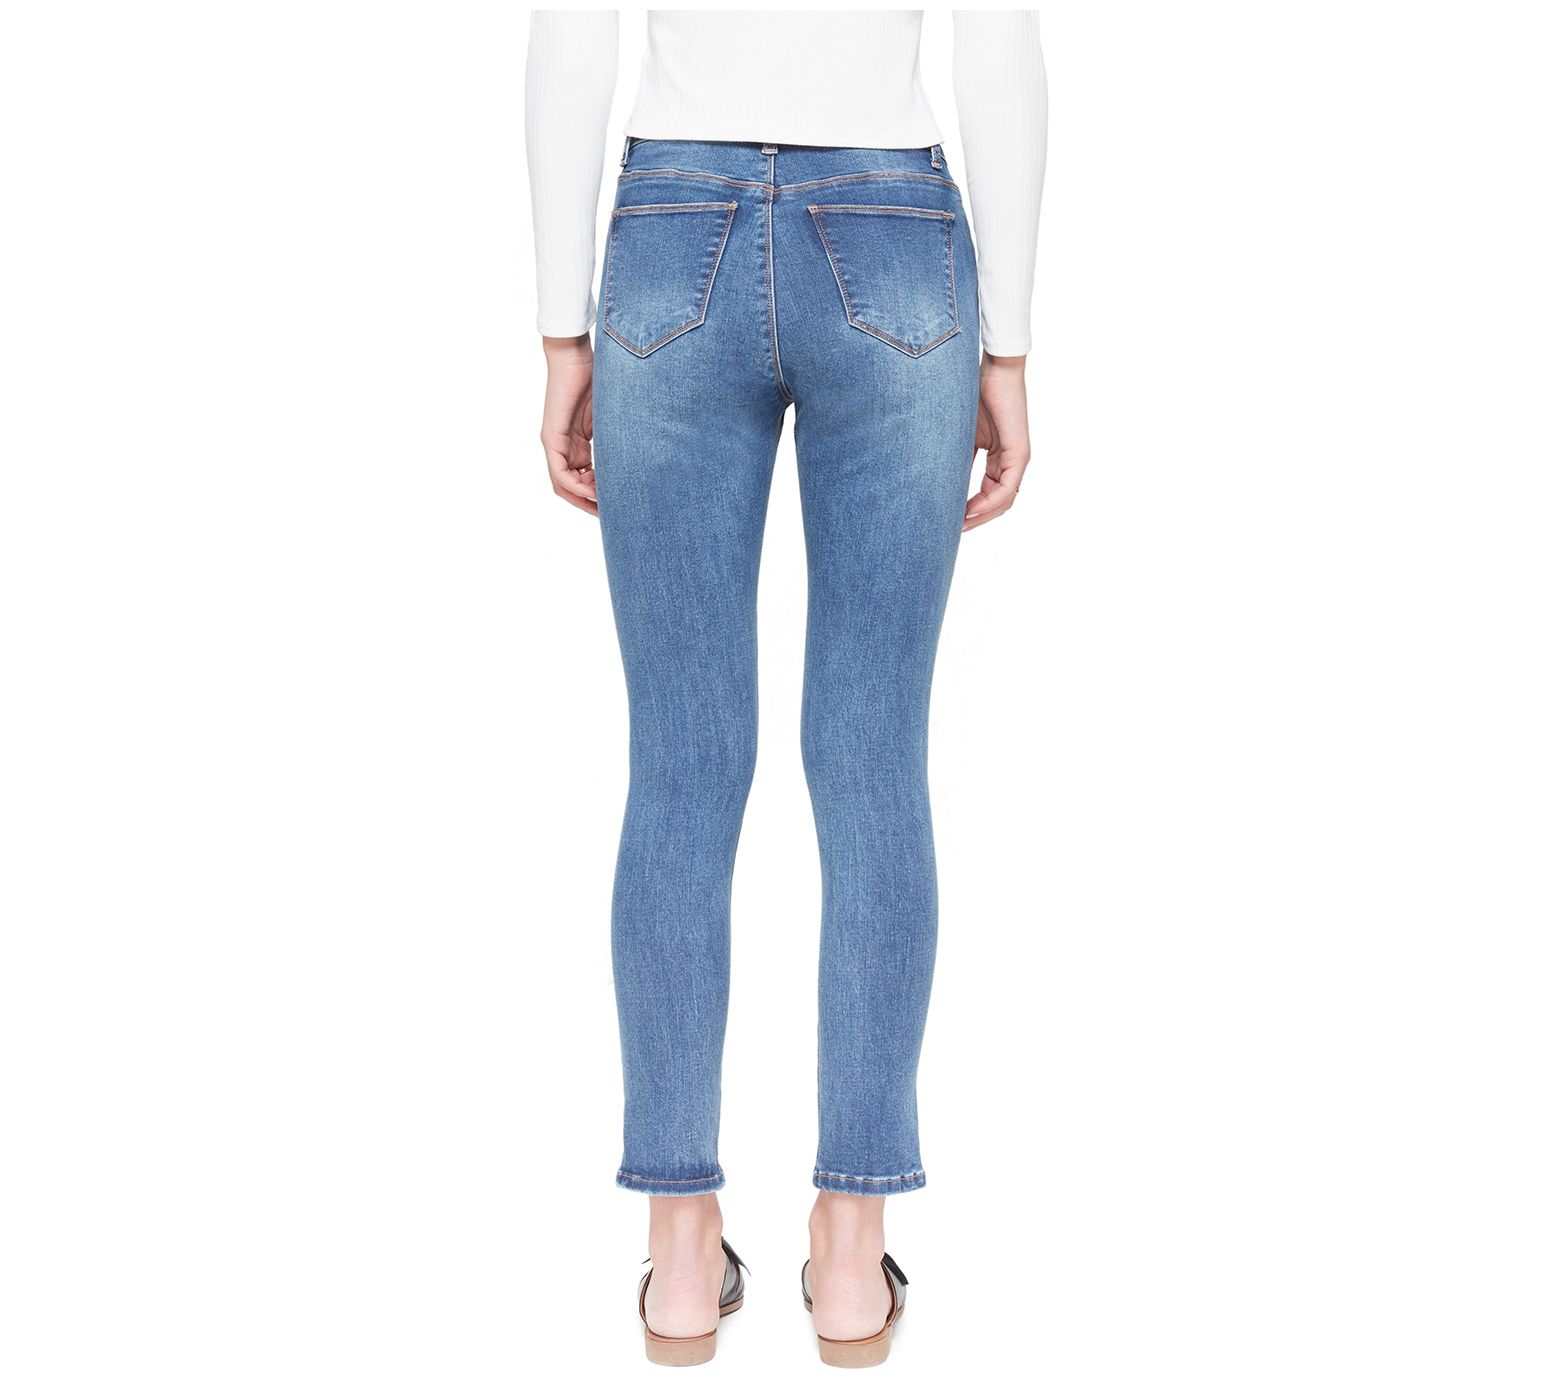 Lola Jeans Front Seam High Rise Skinny Jeans -Alexa - QVC.com